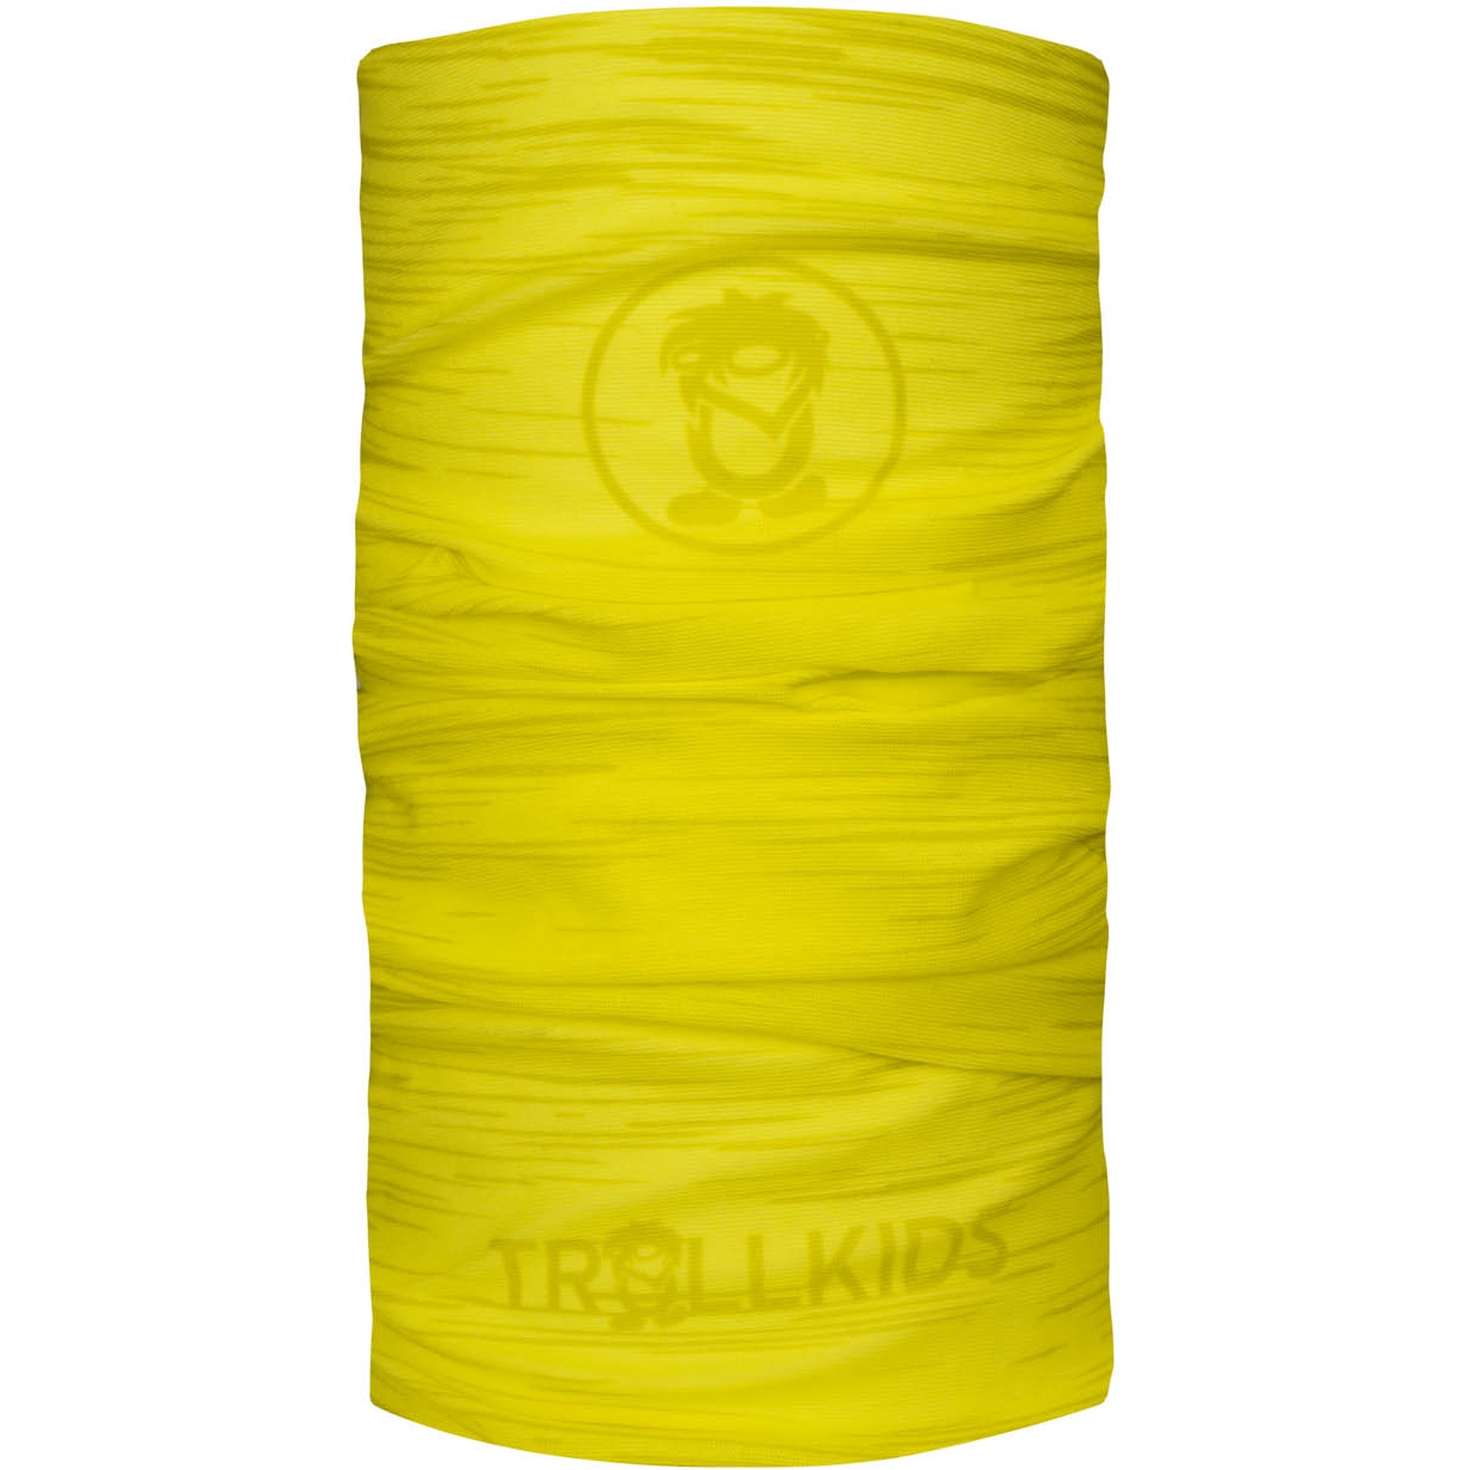 Productfoto van Trollkids Troll Kids Multitube - hazy yellow/clay green